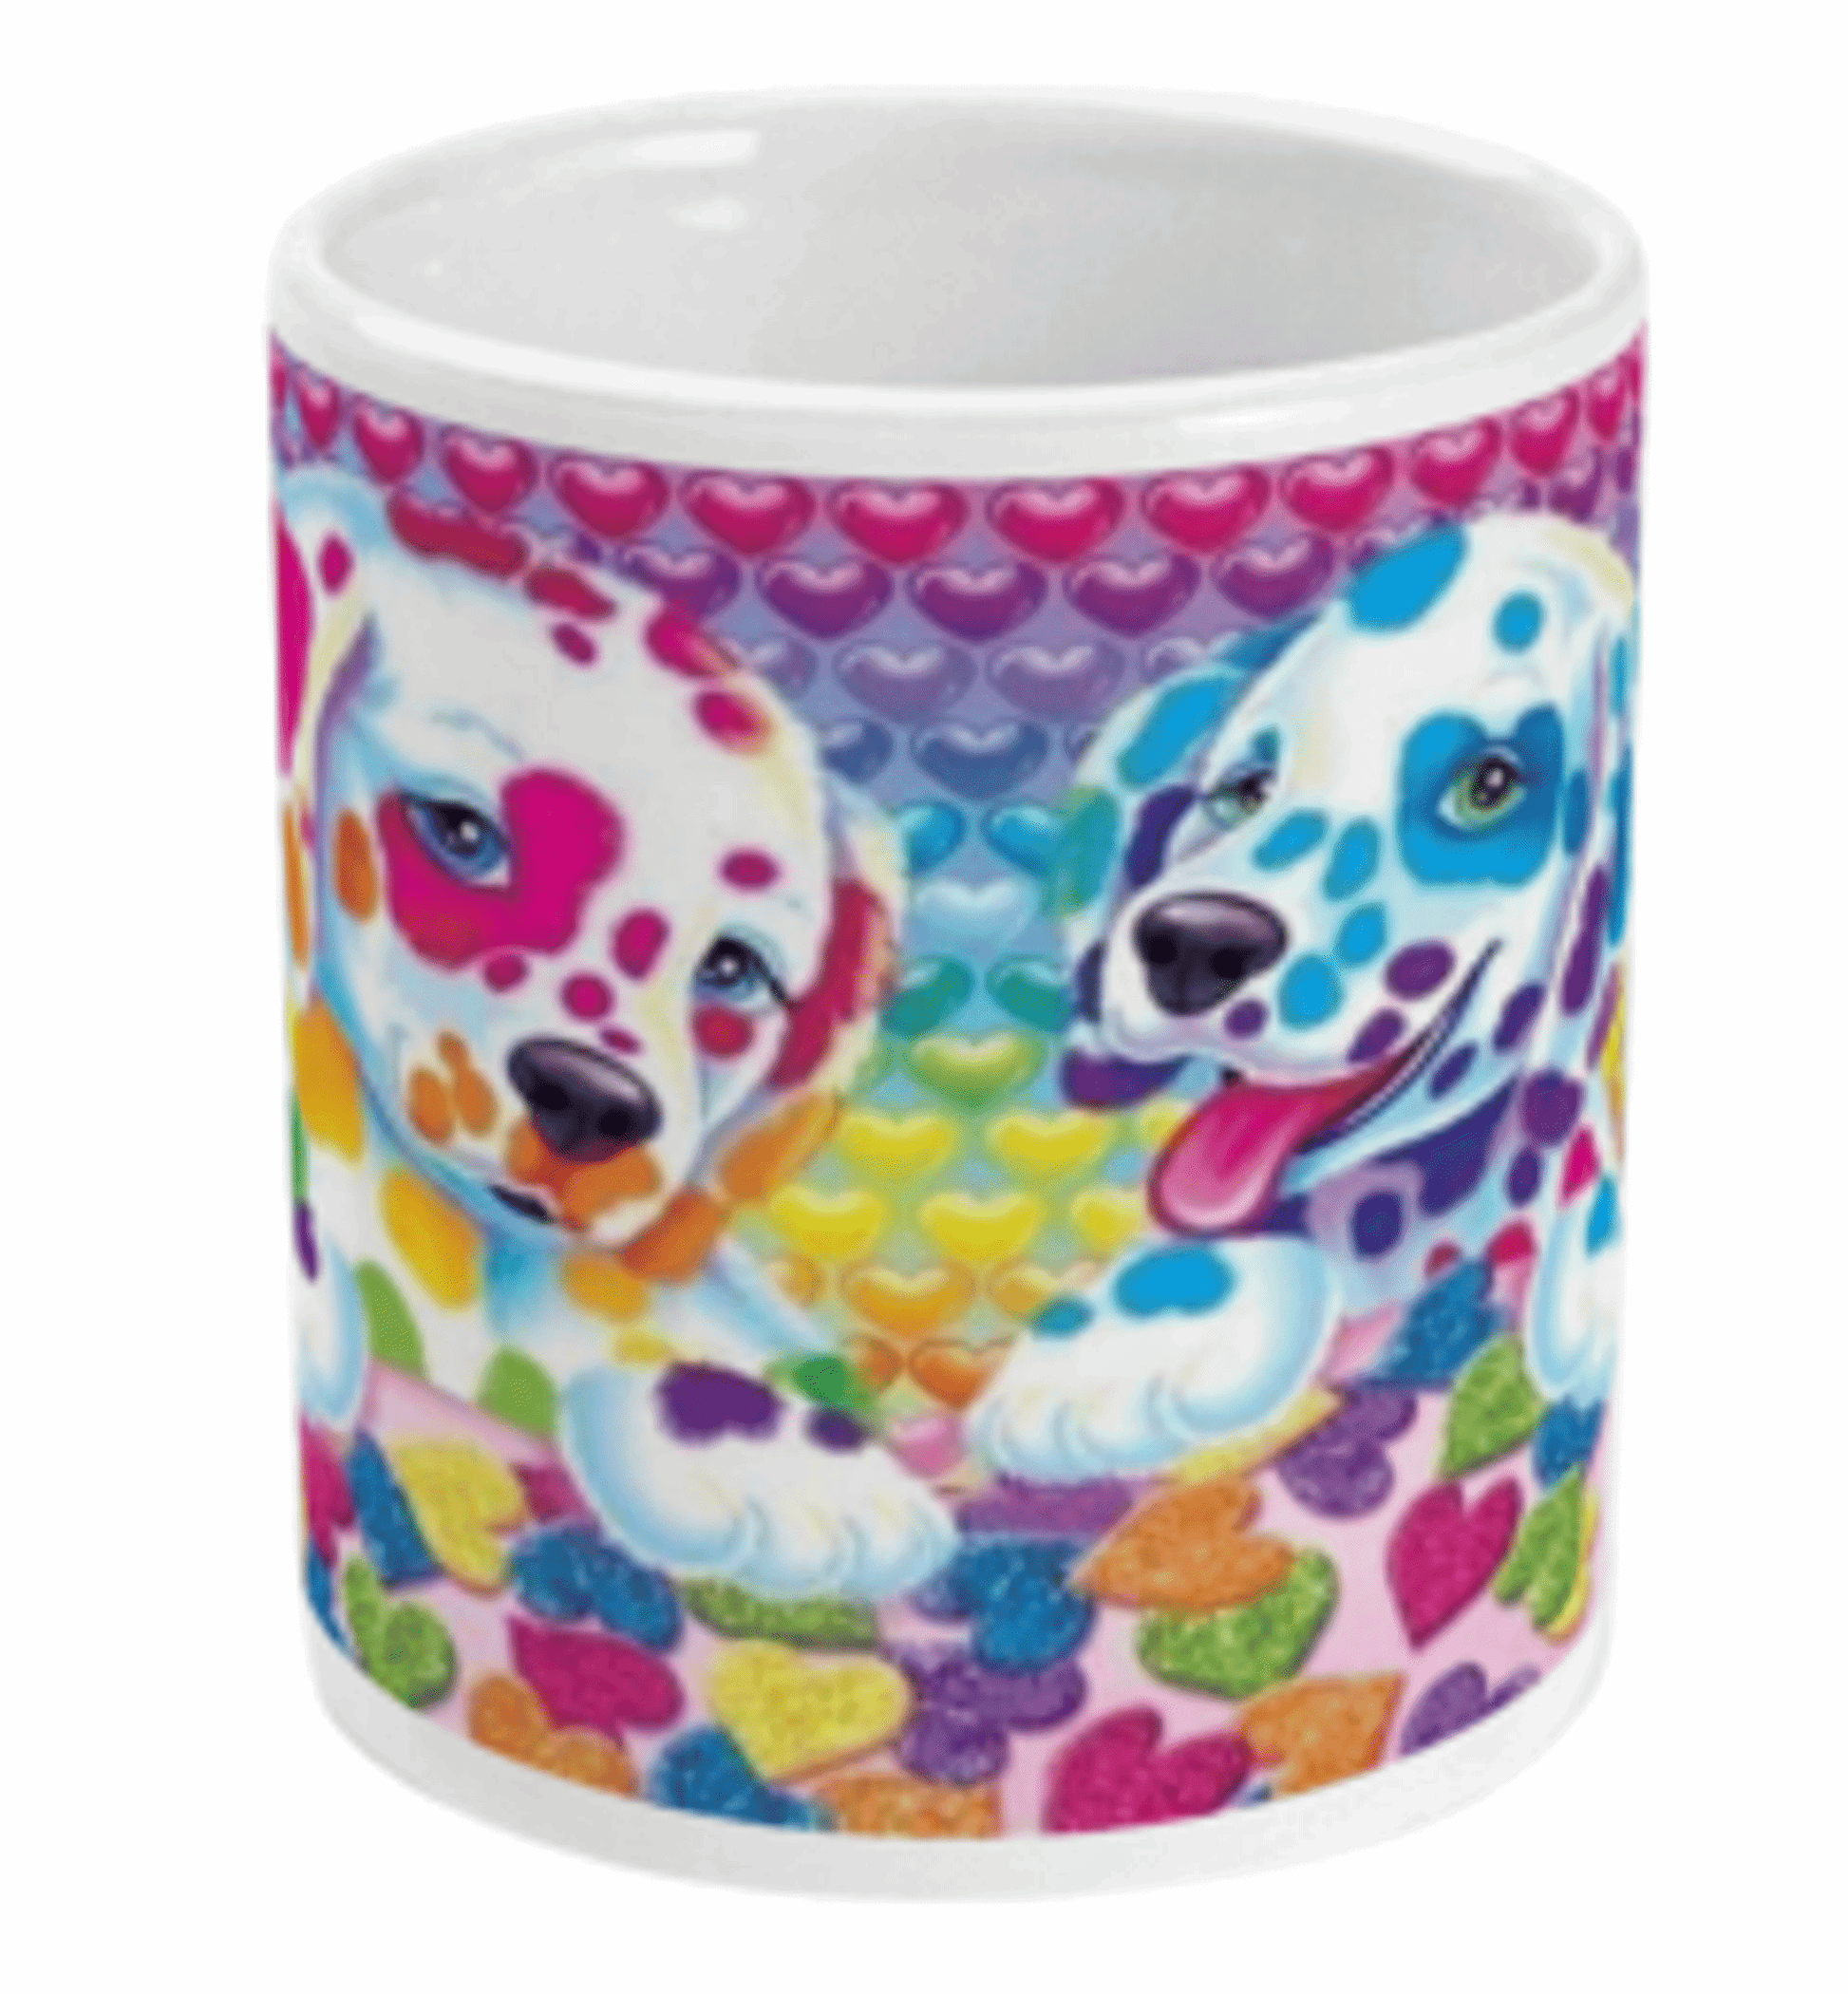  Paint Splattered Puppies Mug by Free Spirit Accessories sold by Free Spirit Accessories